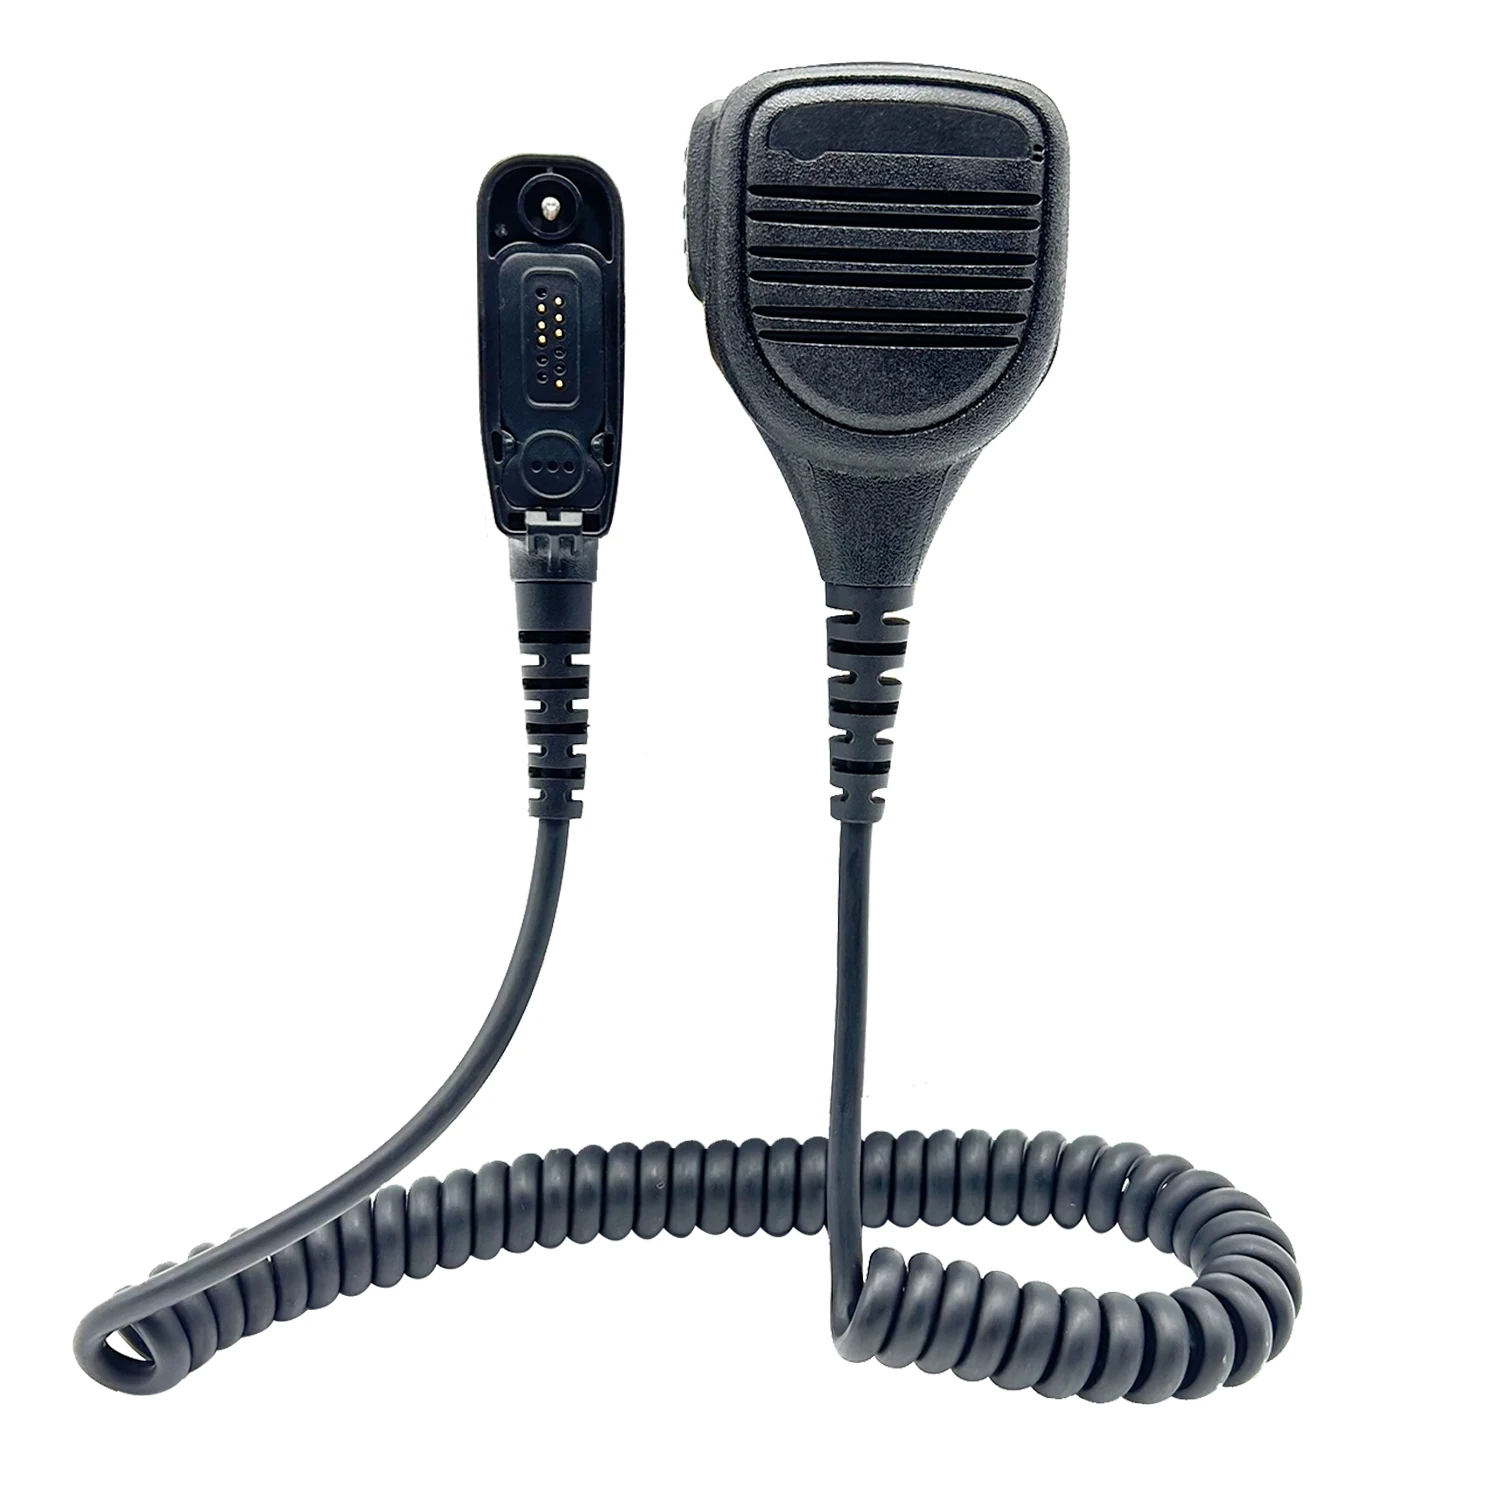 Walkie Talkie Remote Speaker Microphone Mic For XPR6350 XPR6550 XPR7550 APX7000 DP3400 DP3401 Handheld Radio walkie talkie remote speaker microphone mic for cp200 cp200d ep450 gp88 pr400 two way radio